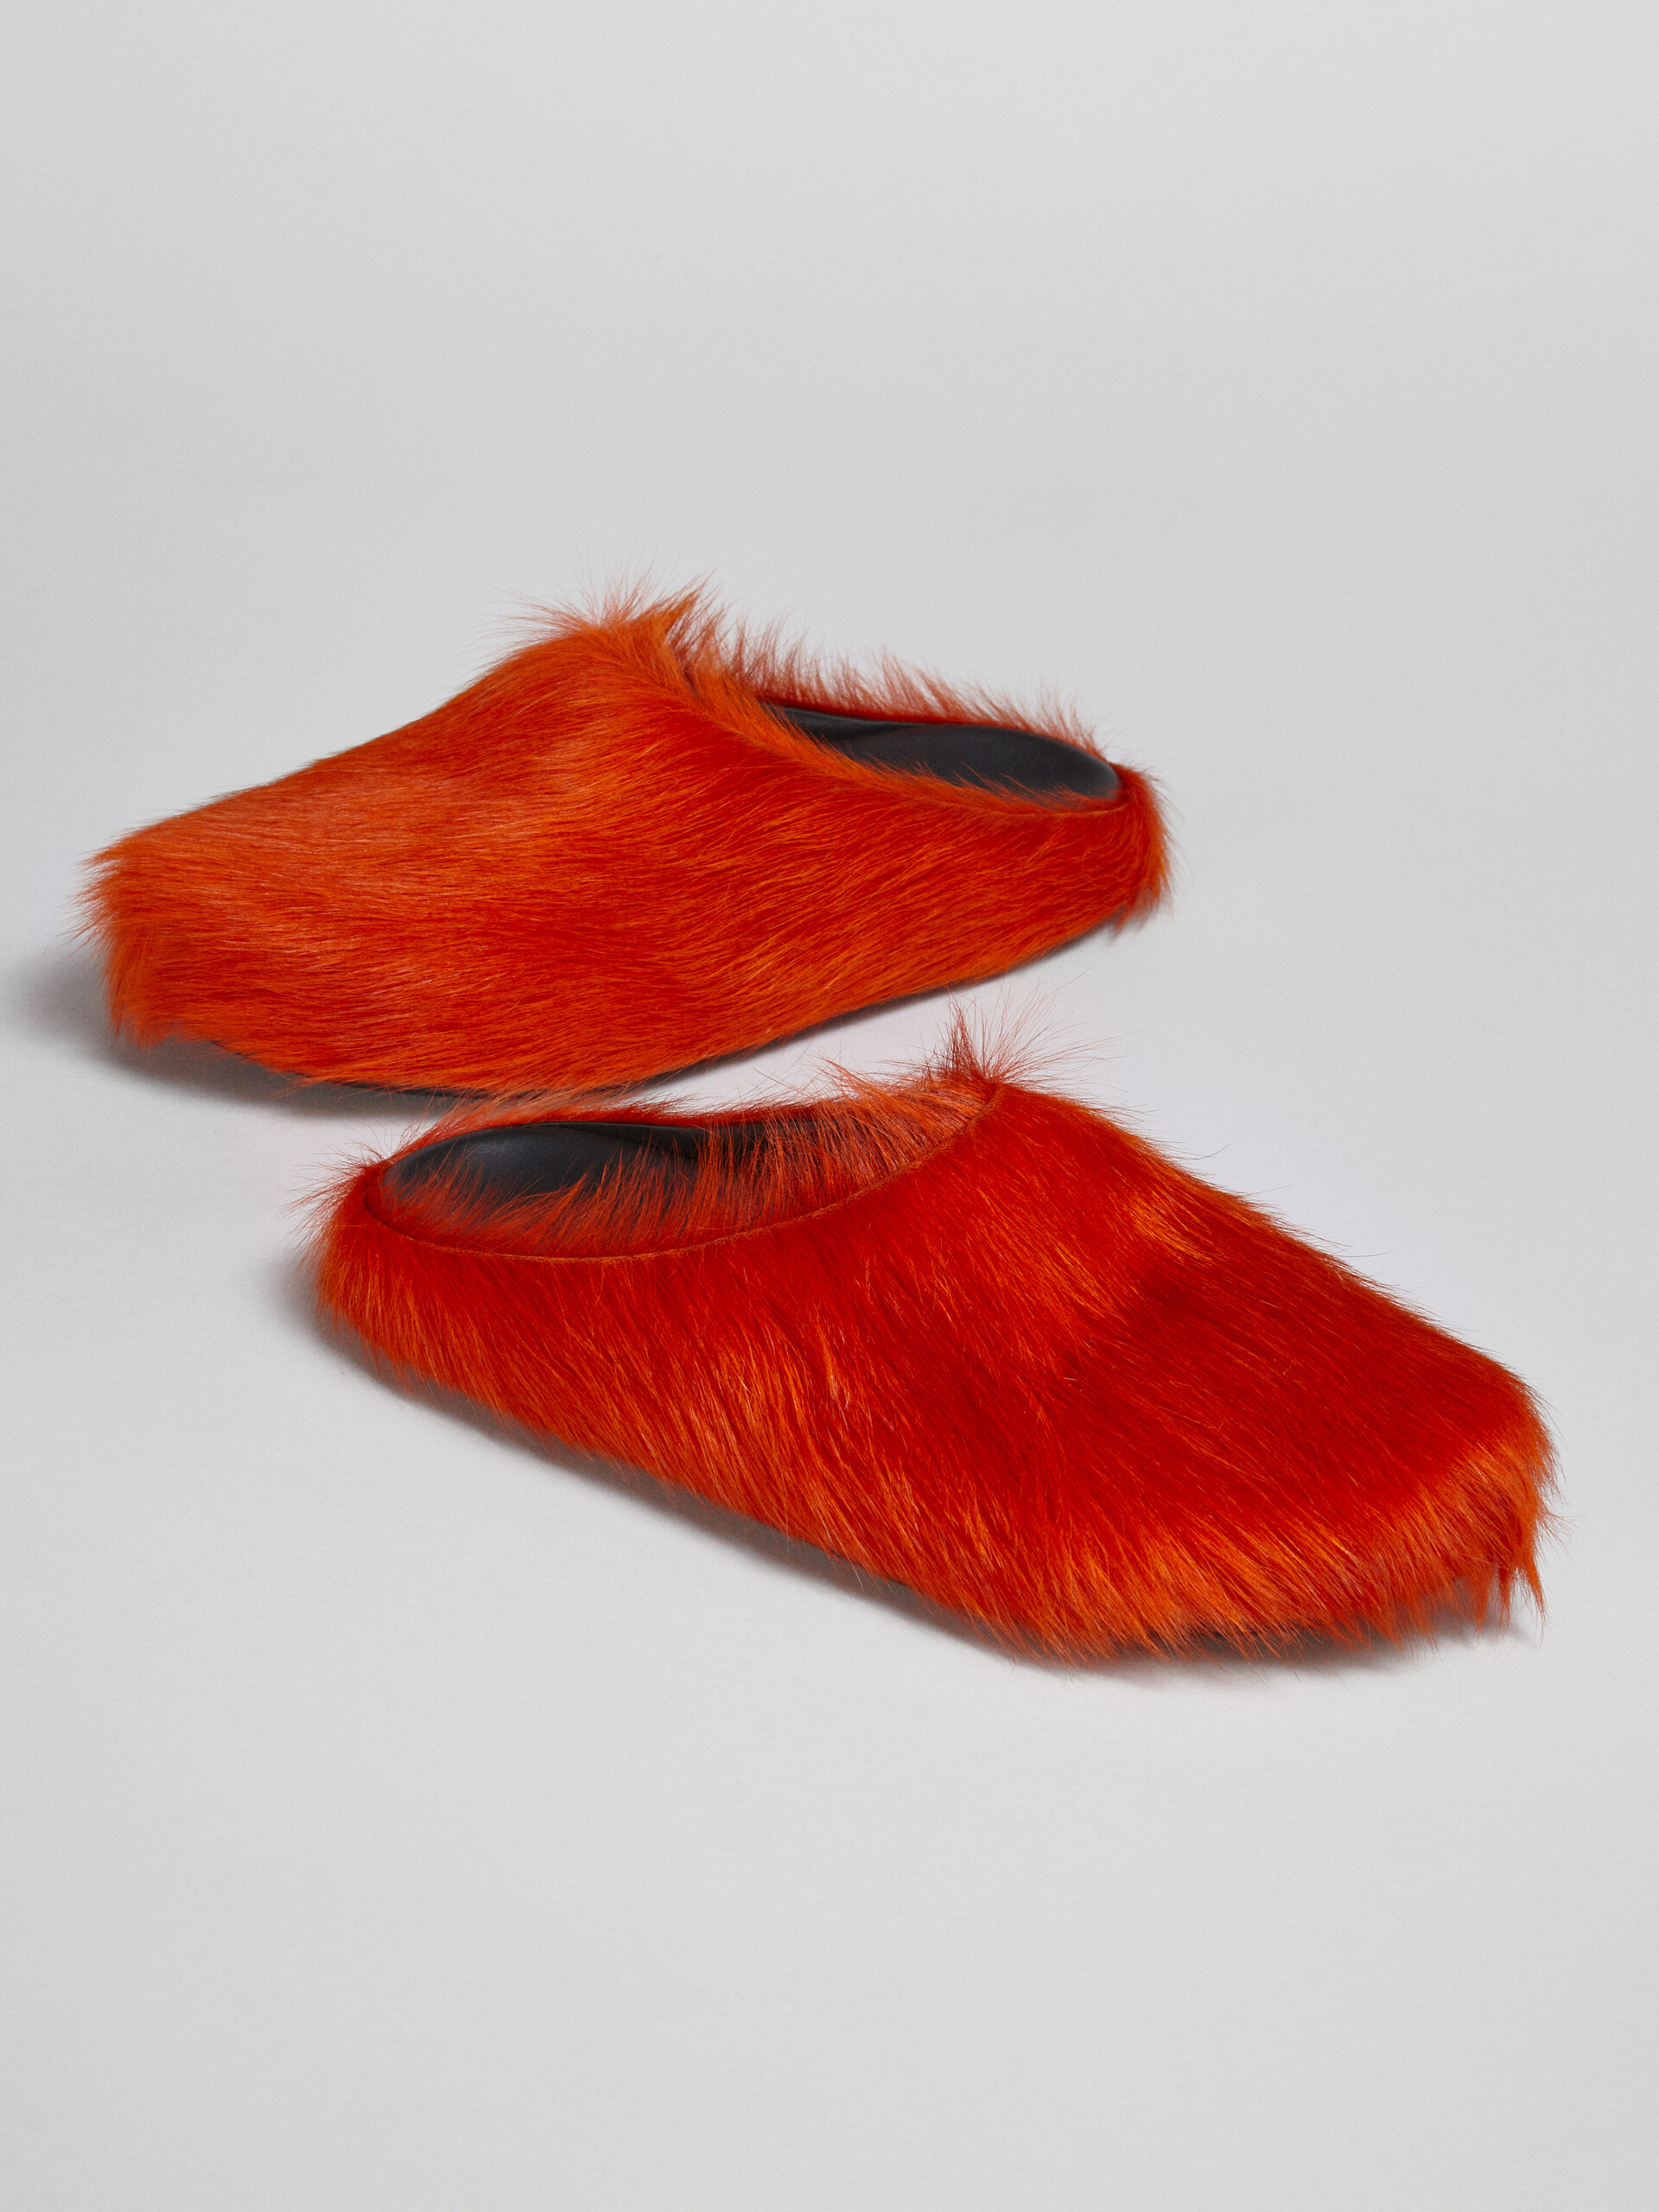 Zueco fussbett de piel naranja con efecto pelo - Zuecos - Image 5